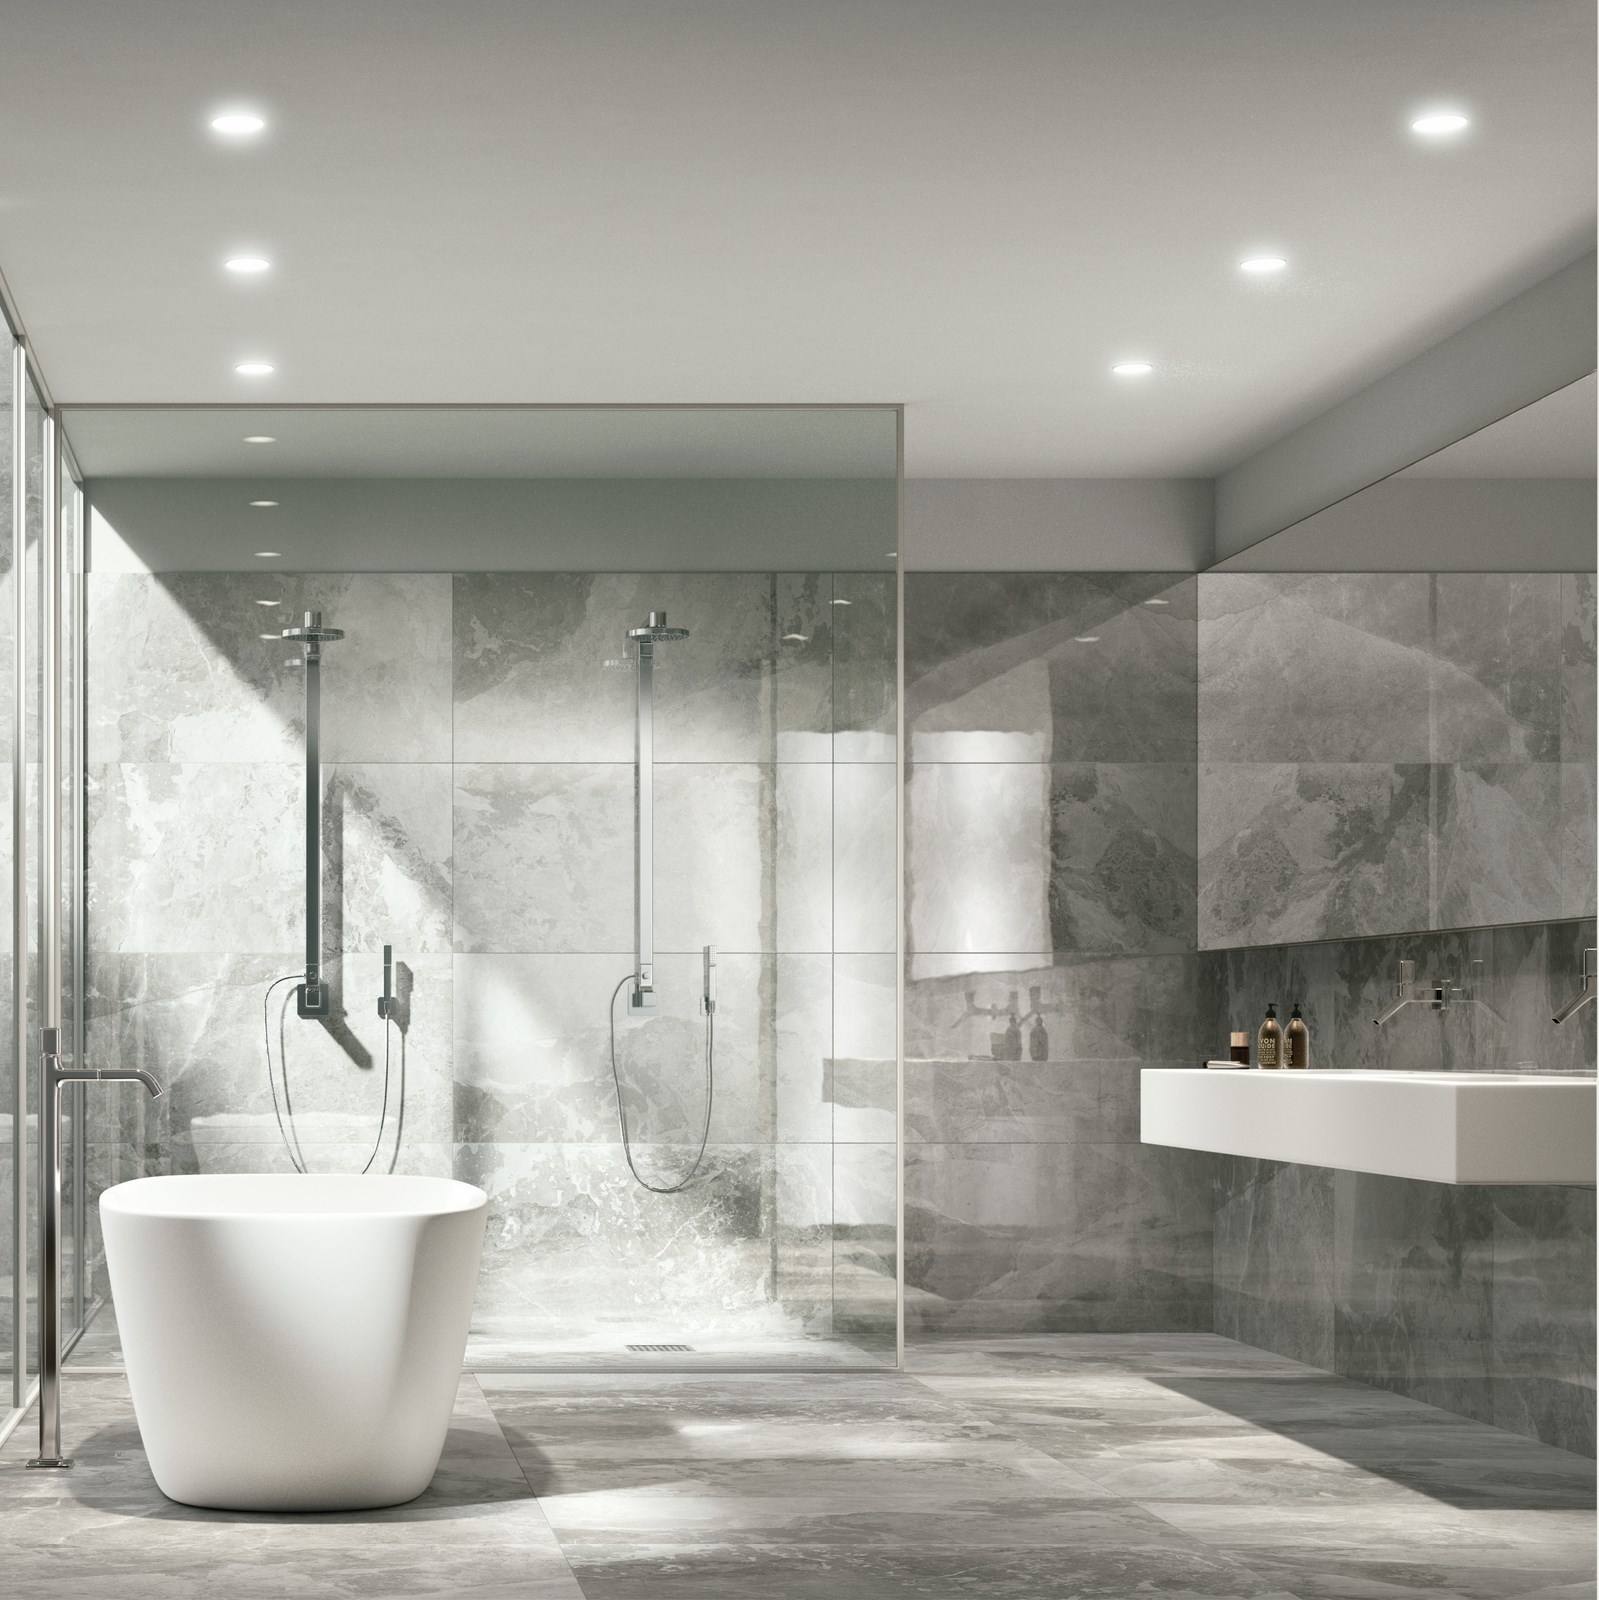 25 amazing Italian bathroom tile designs ideas and pictures